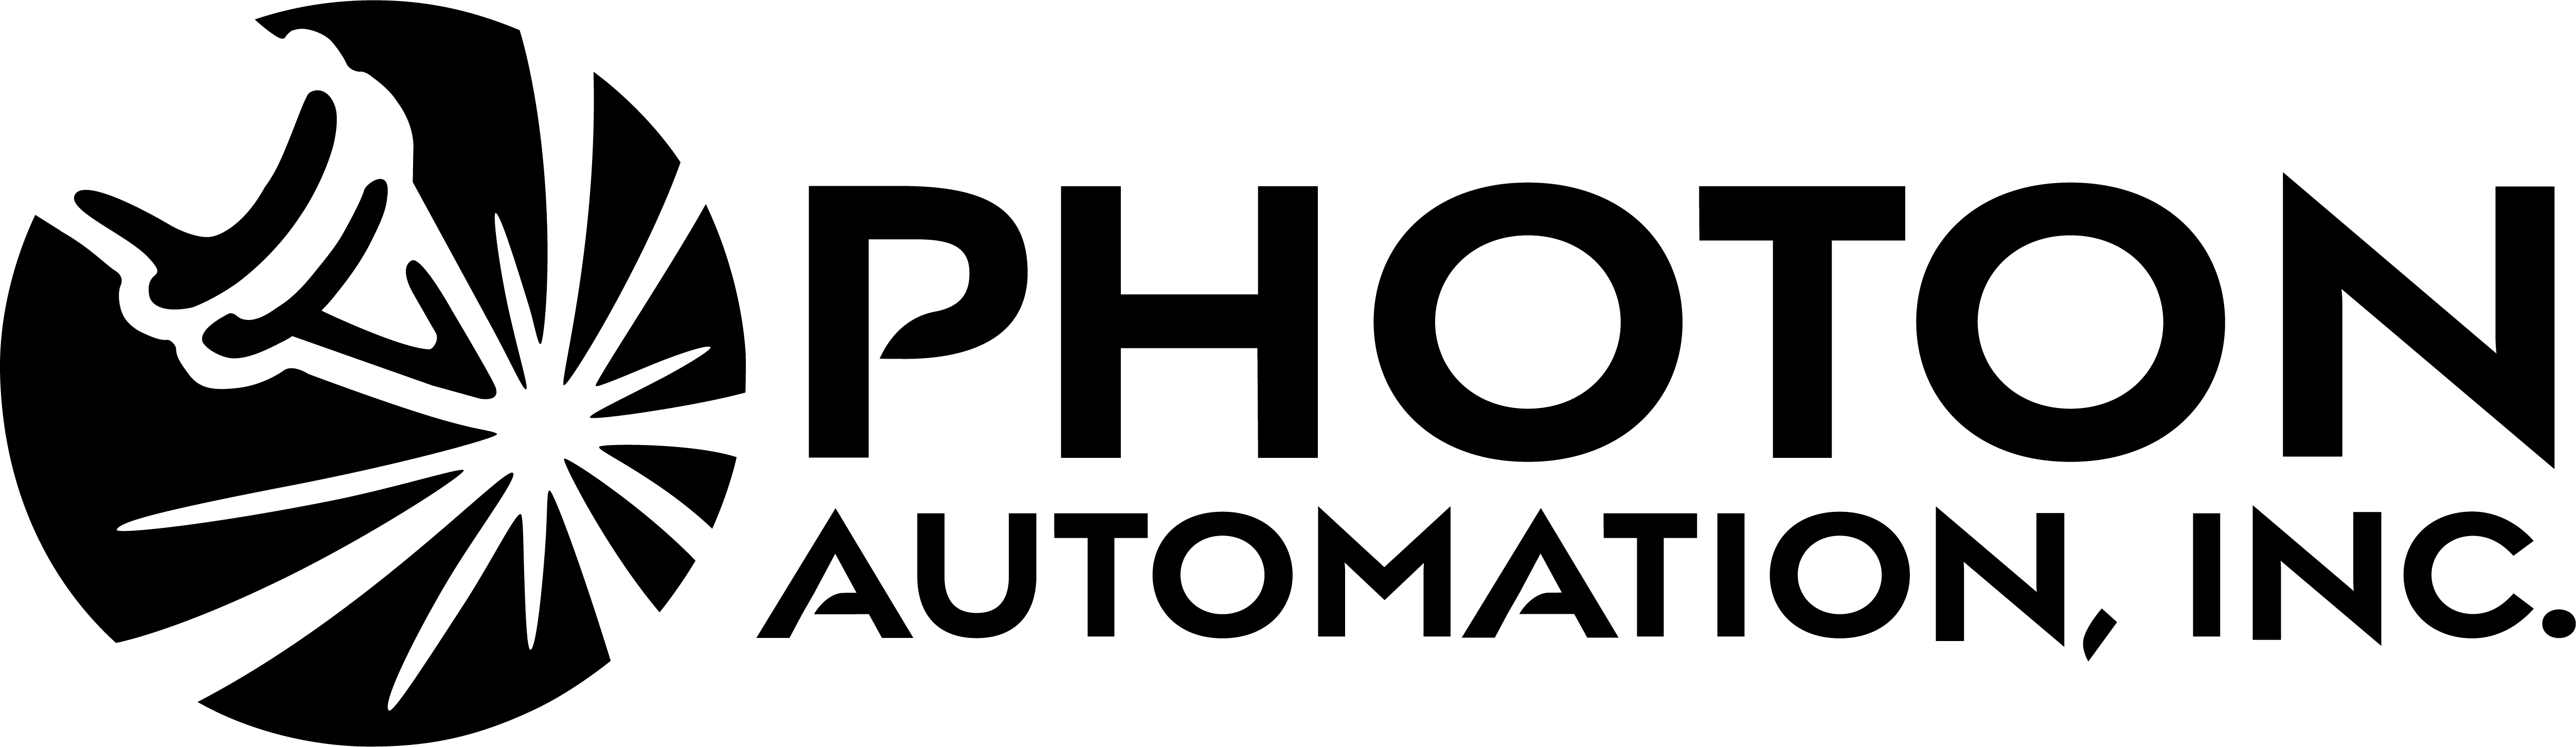 Photon Automation logo